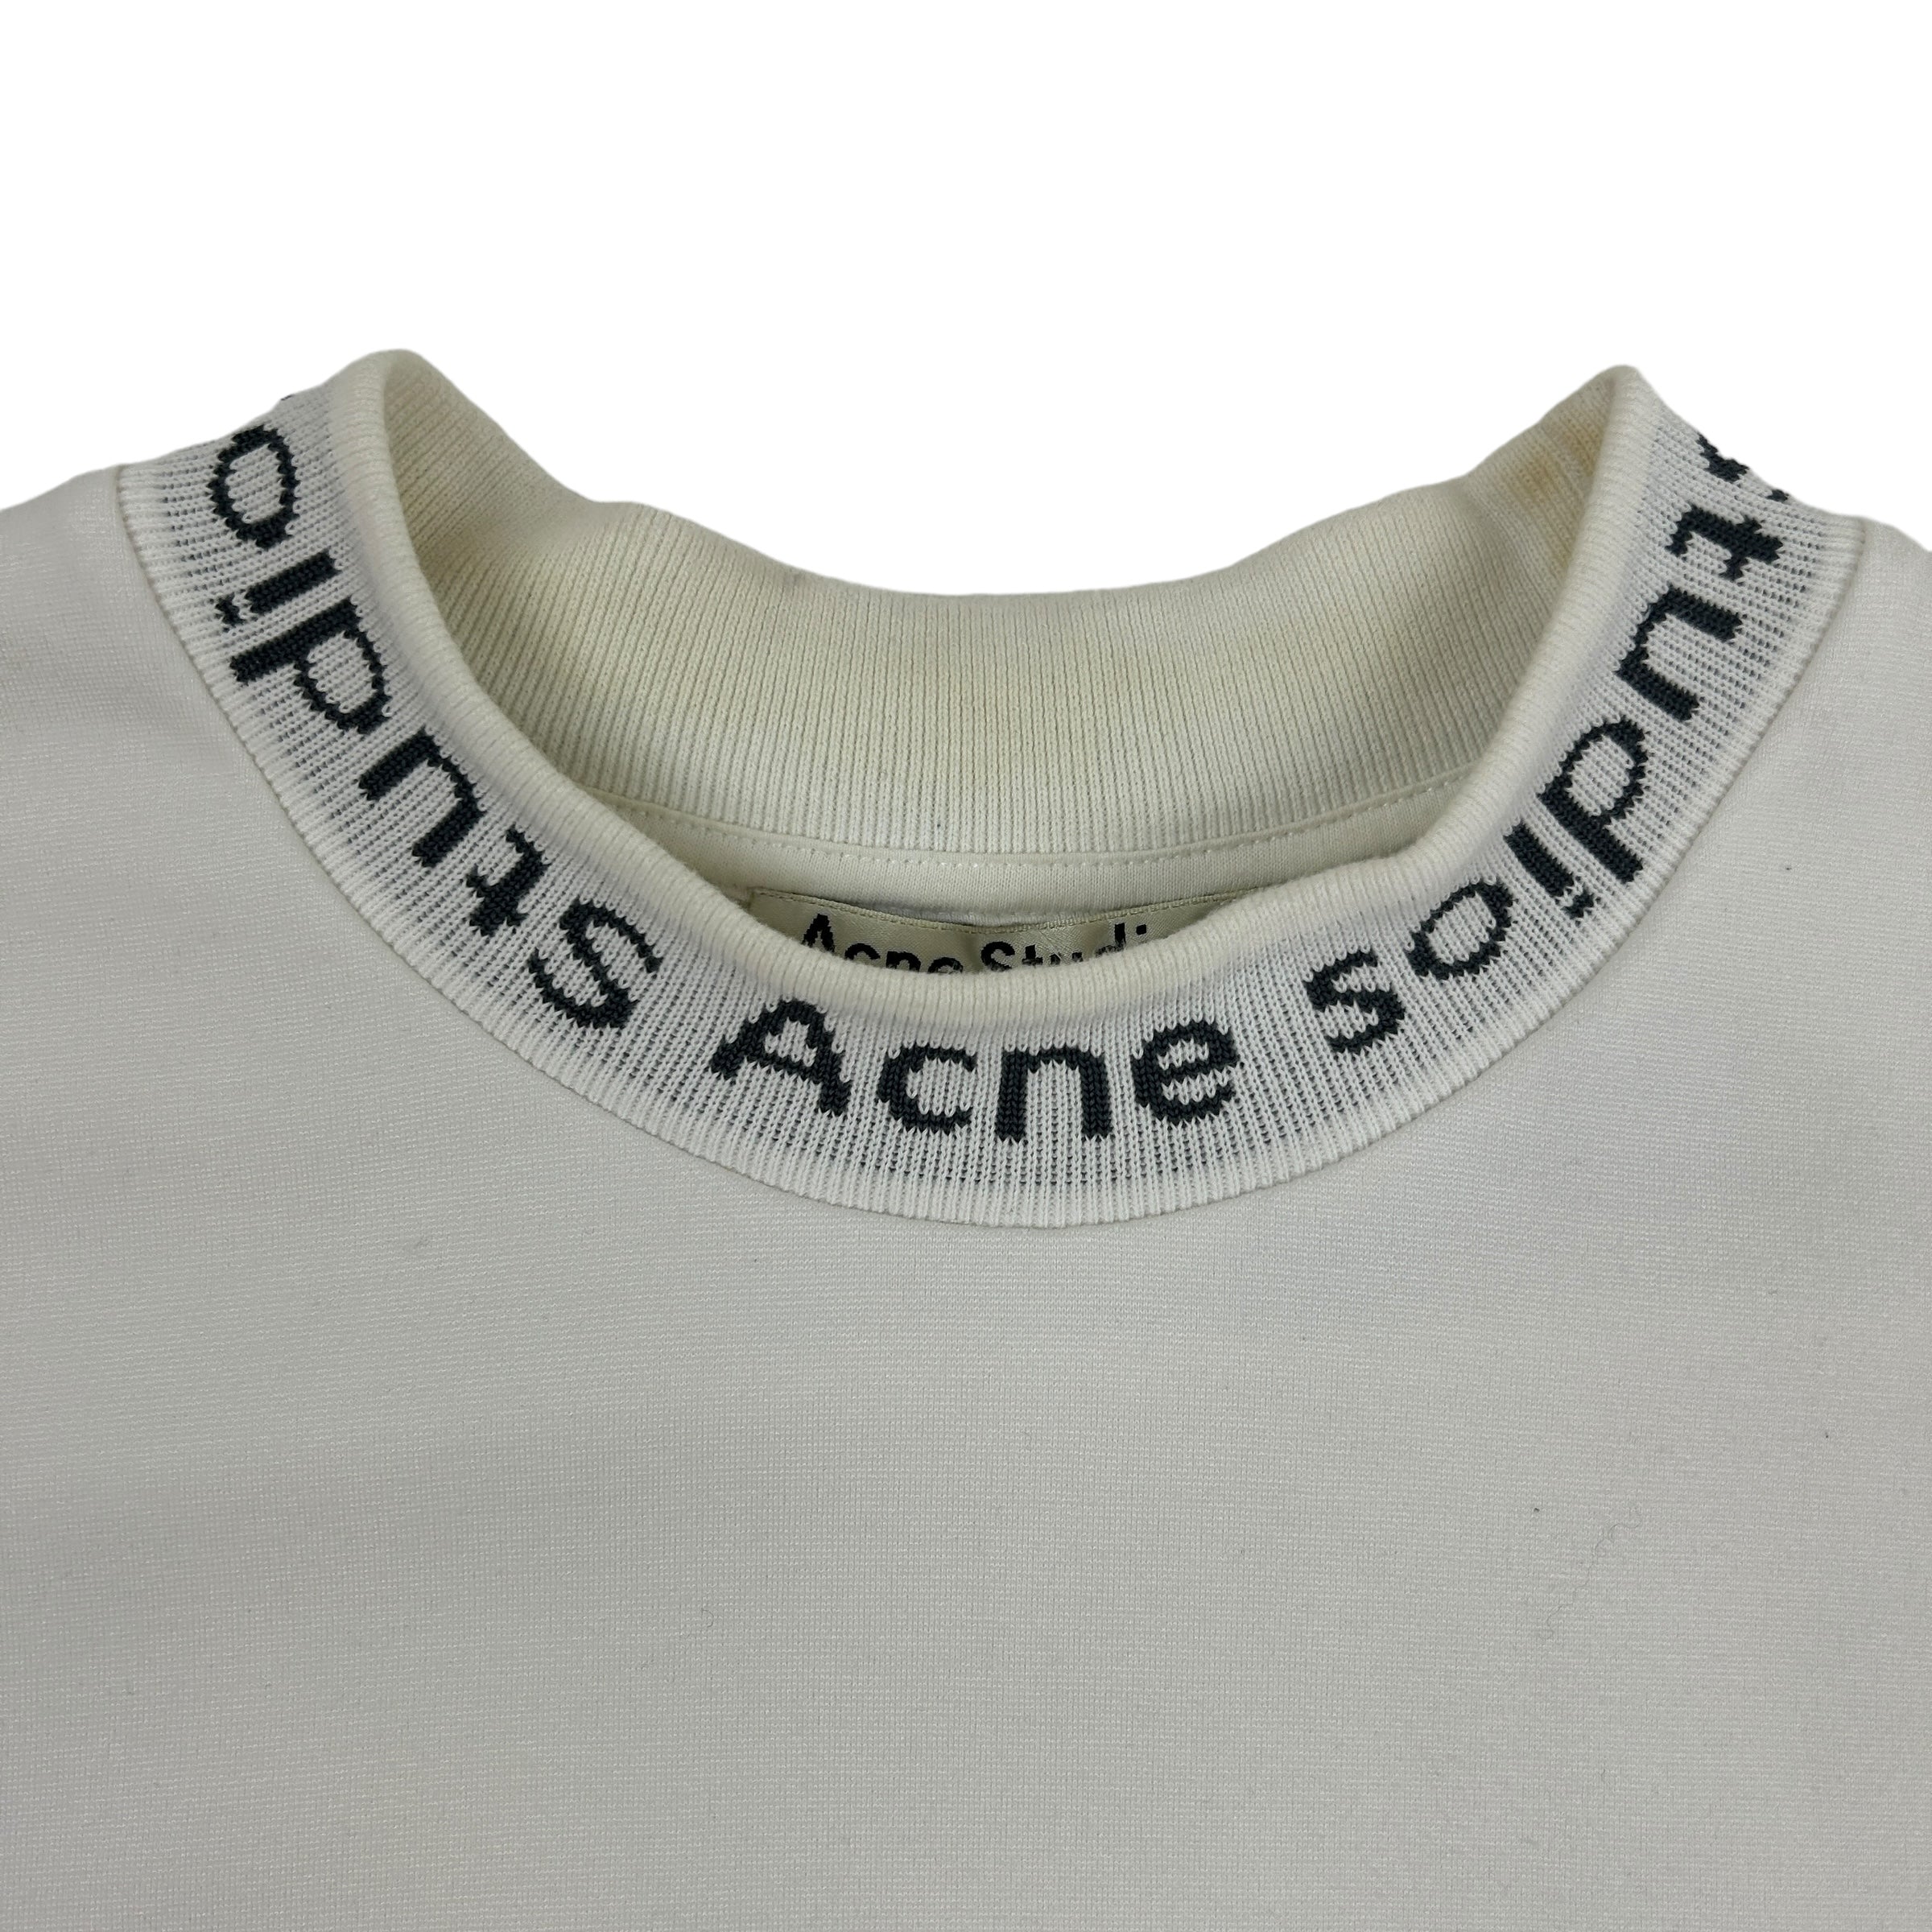 Acne Studios Collar Logo Shirt - White